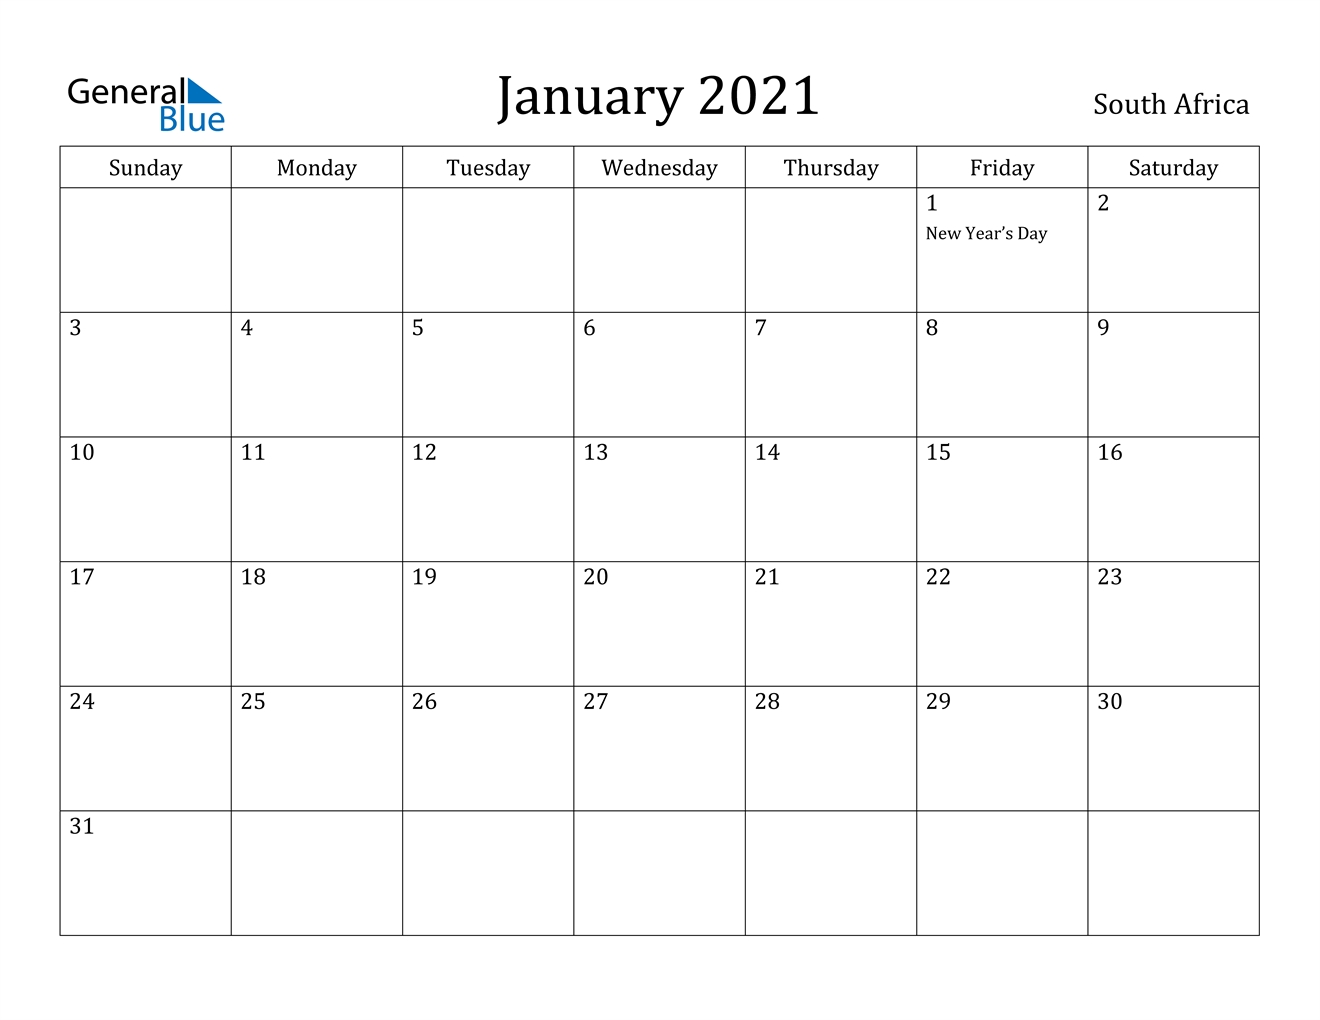 January 2021 Calendar - South Africa-Calendar 2021 South Africa Free Printable